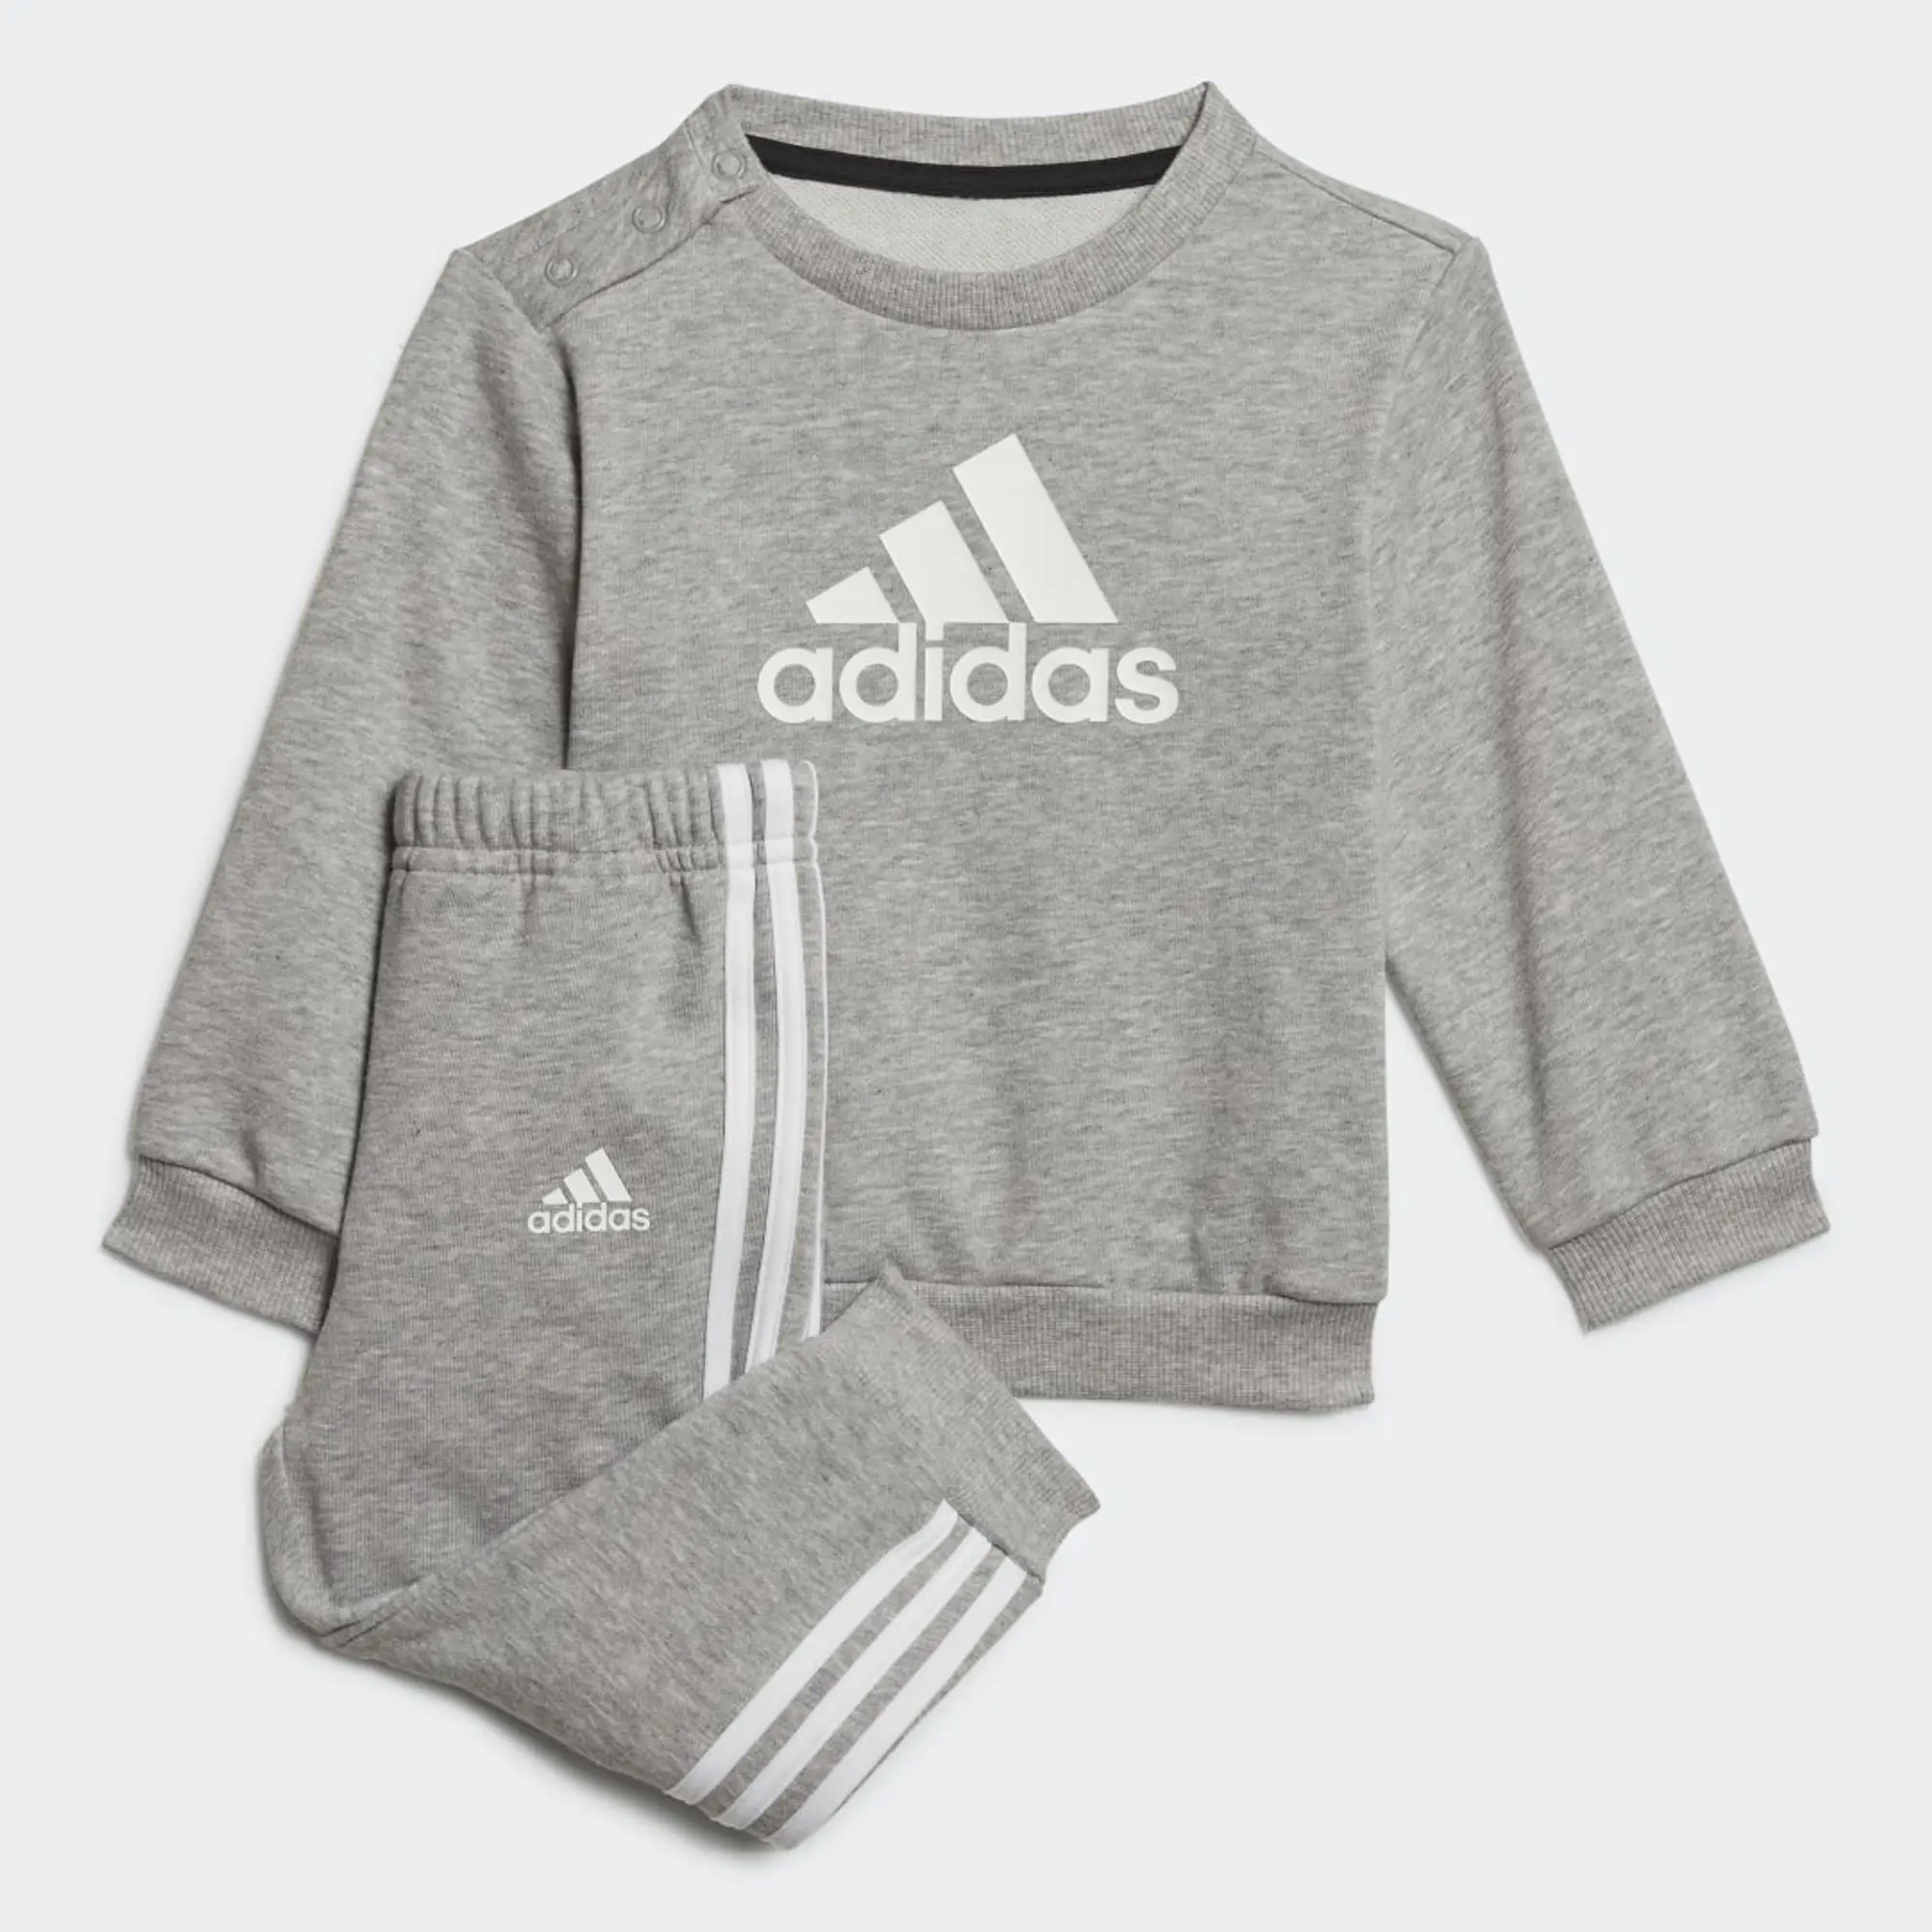 Boys, adidas Sportswear Favourites Toddler Unisex Badge Of Sport Crew & Jogger Set - Light Grey, Light Grey